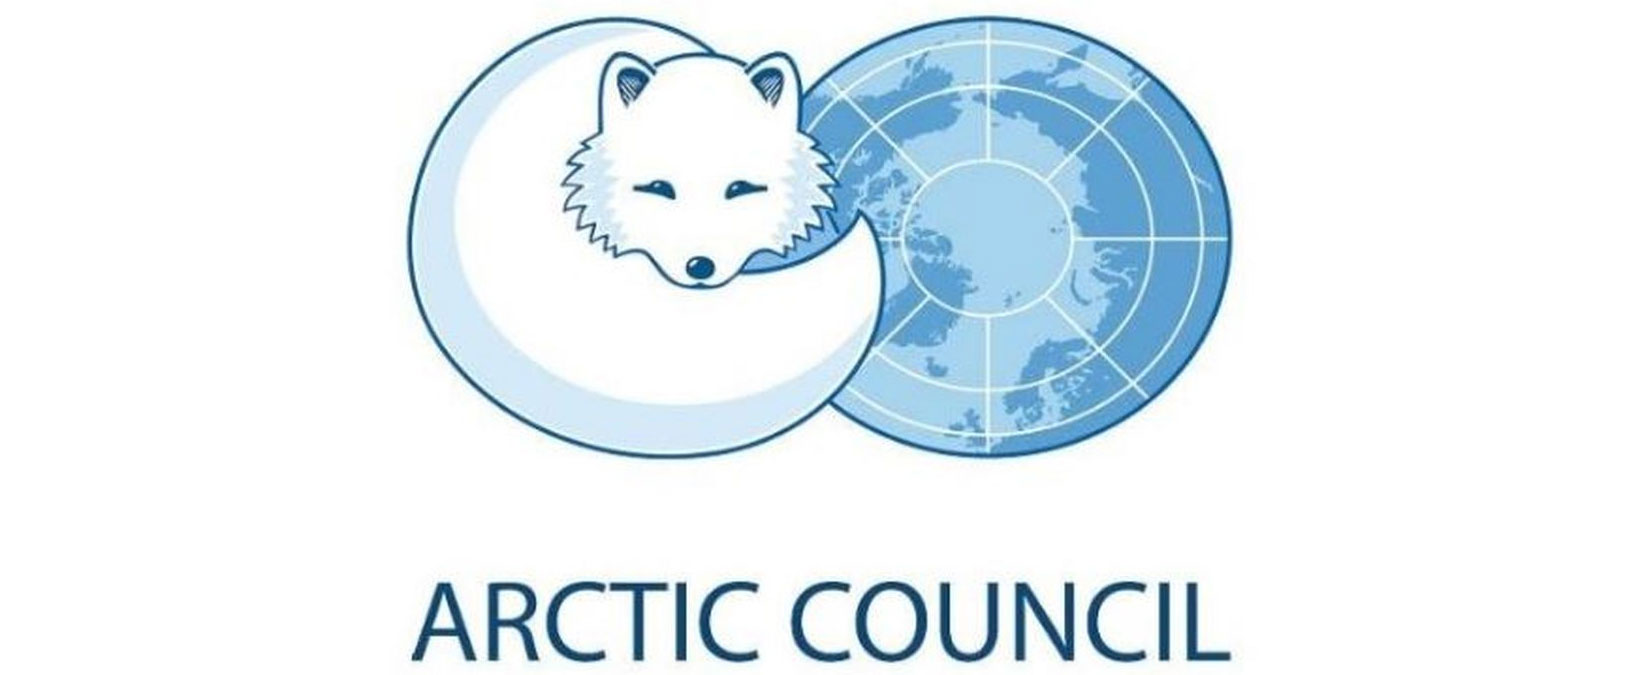 Arctic Council logo